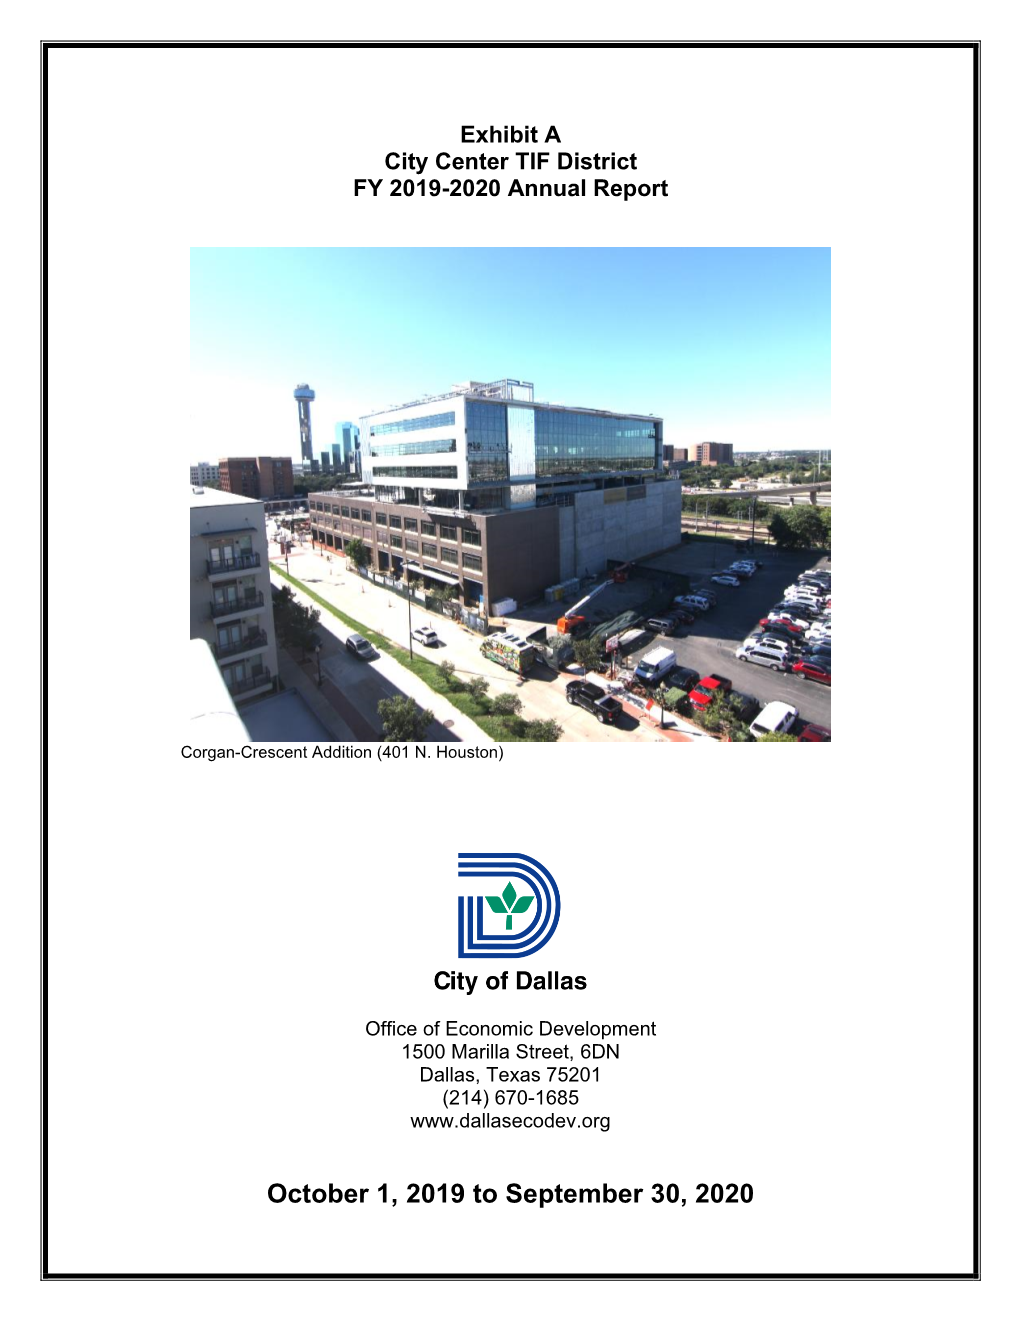 City Center TIF District Annual Report FY 2019-2020